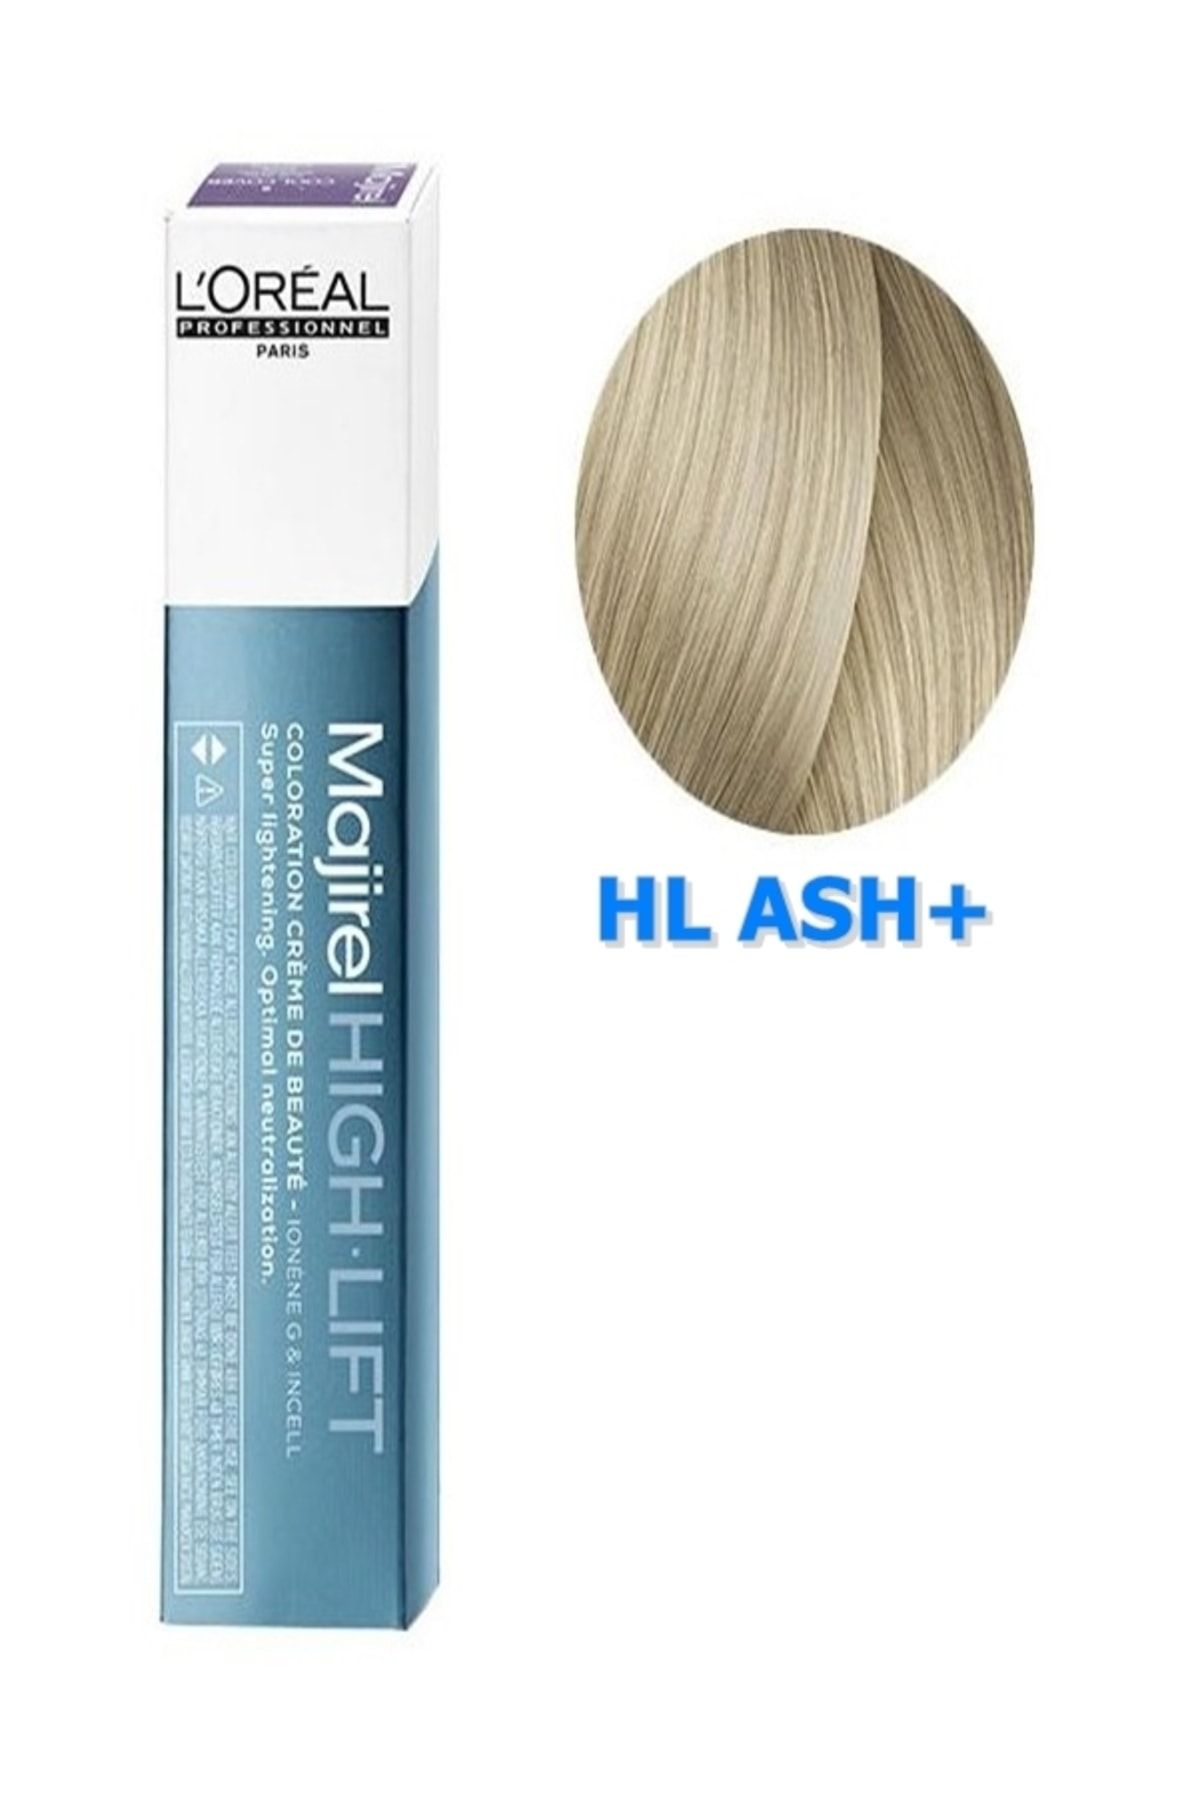 L'oreal Professionnel Orıjınal Yeni Ürün Loreal Majirel Saç Boyası High Lift Hl Ash+ 50ml